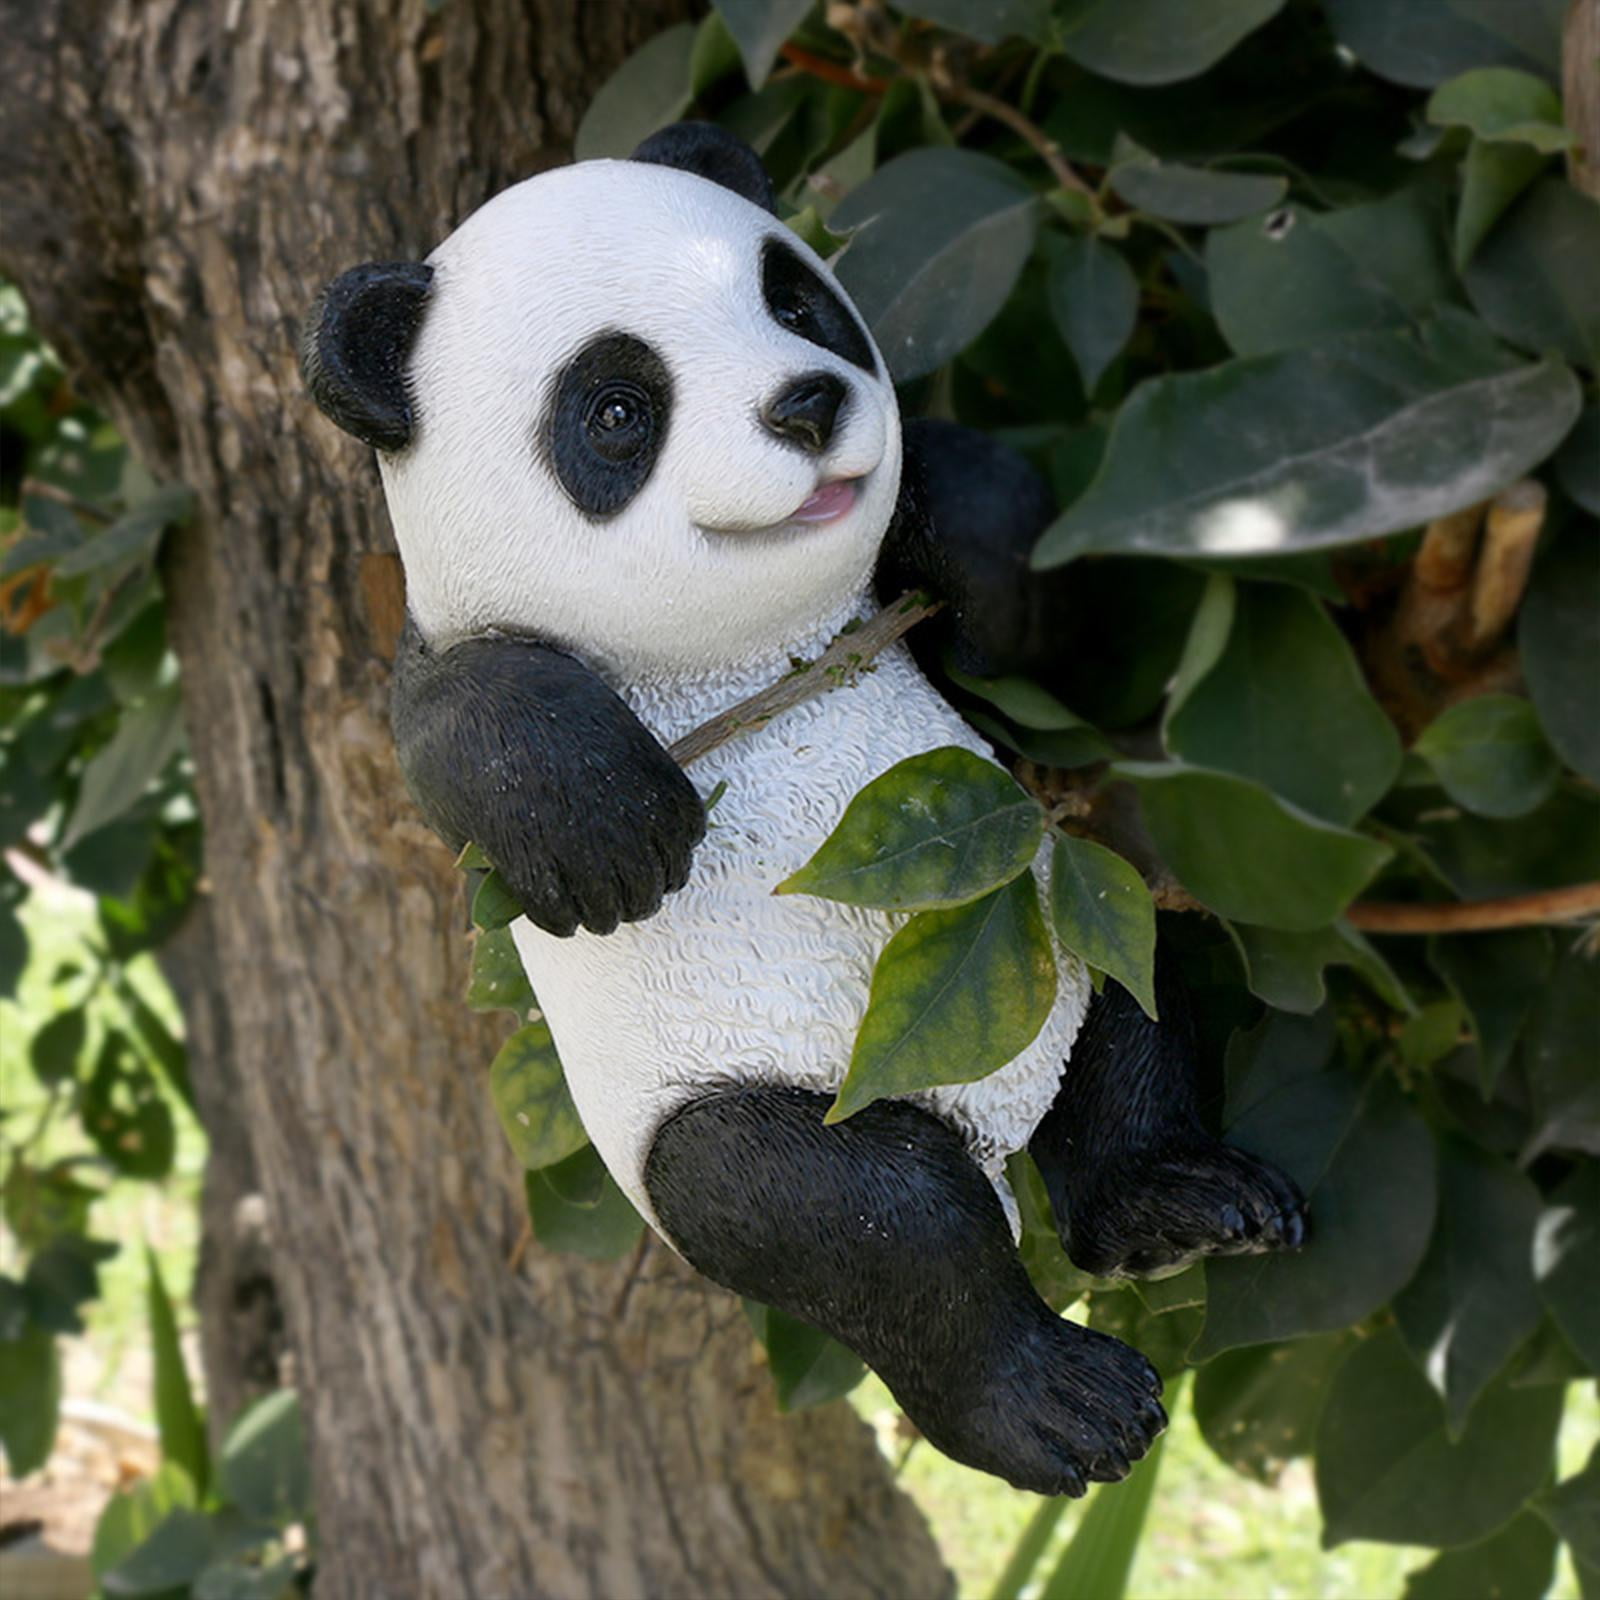 Outdoor Lawn Yard Animal Figurine Panda Outdoor Statue for Home Patio Yard, Size: 10cmx8cmx17cm, Black